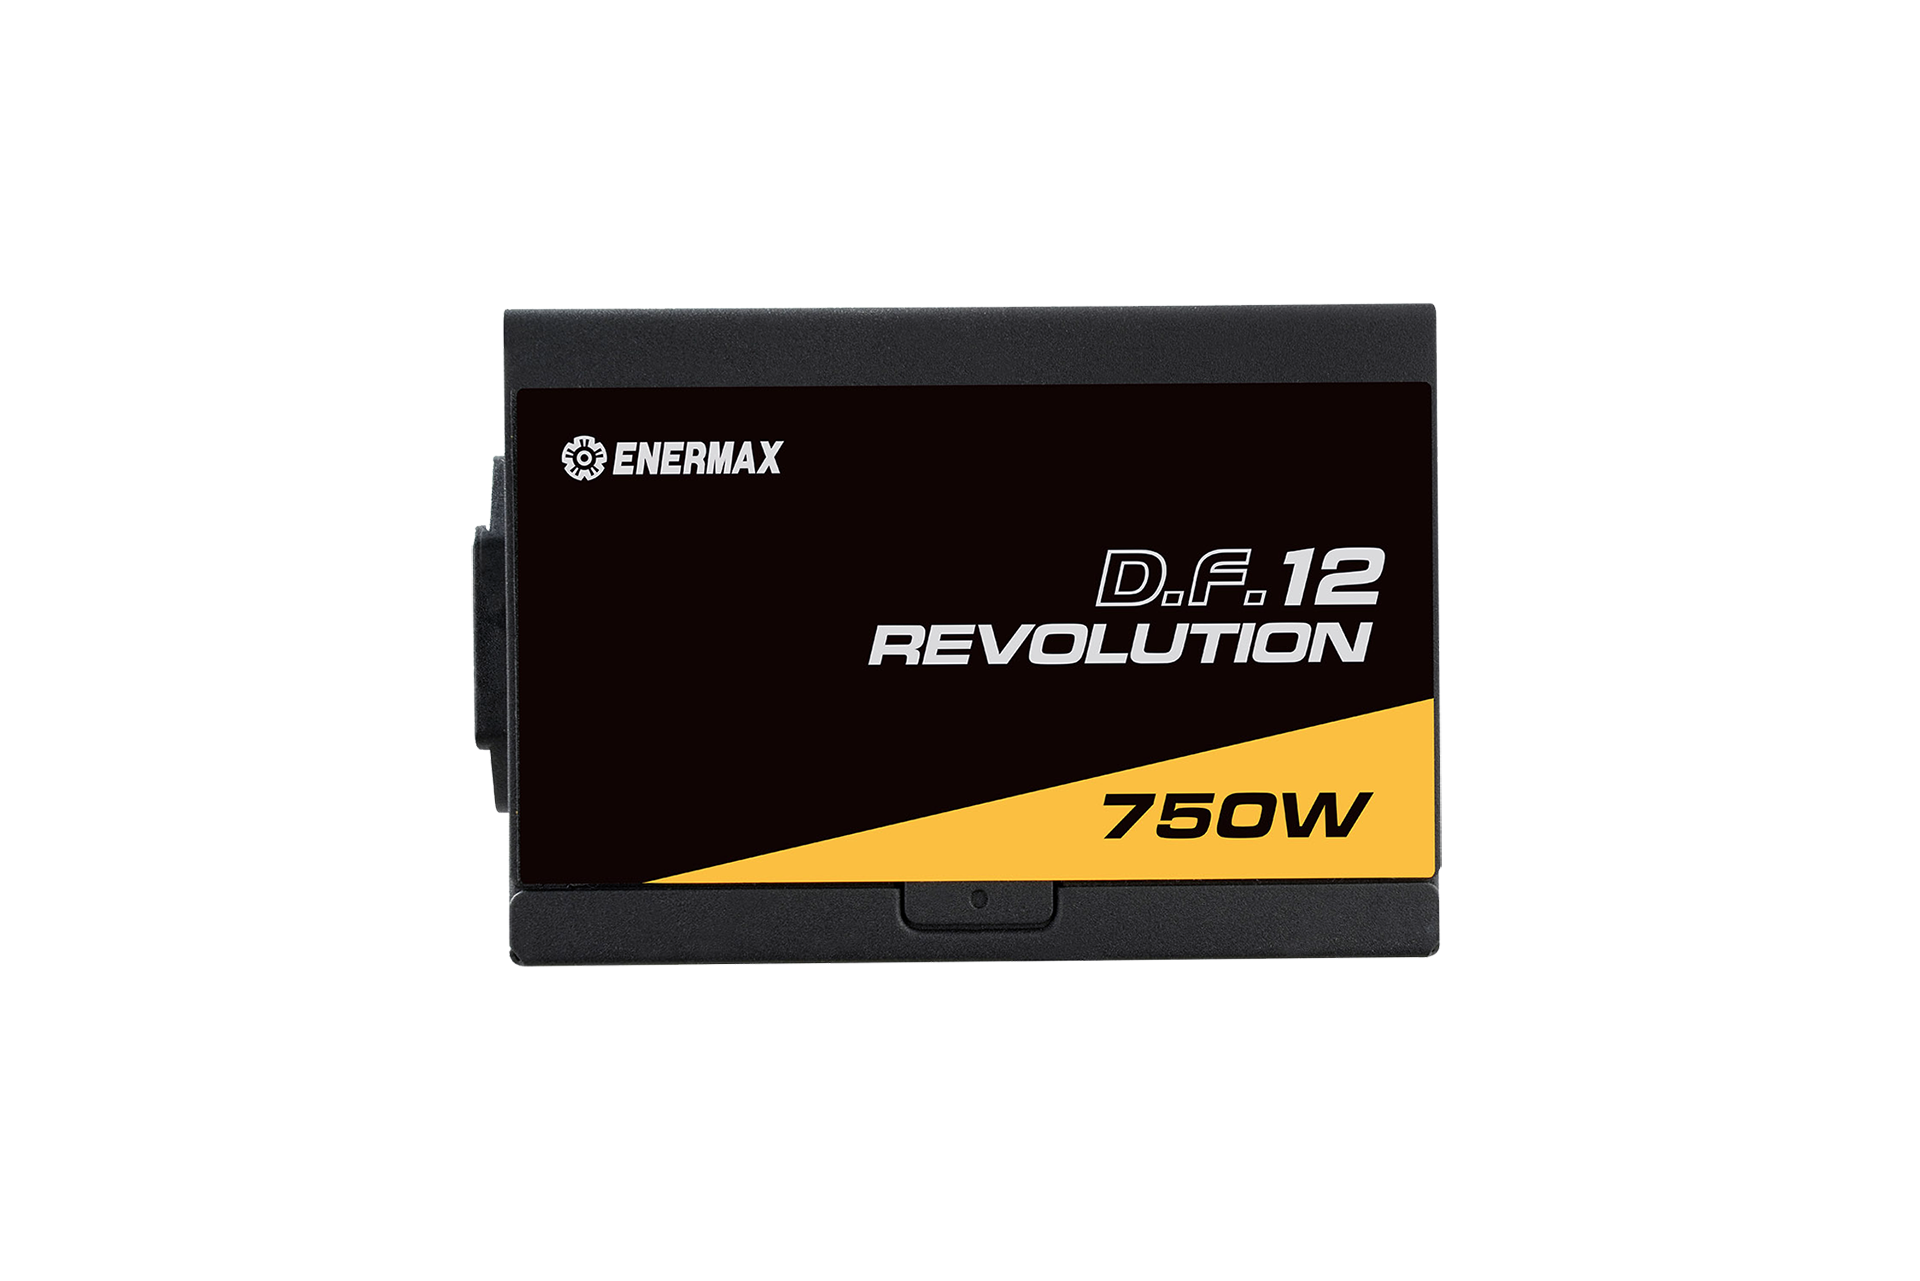 REVOLUTION D.F. 12 750W / 80 PLUS® Gold / ATX 3.1 Fully-Modular Power Supply